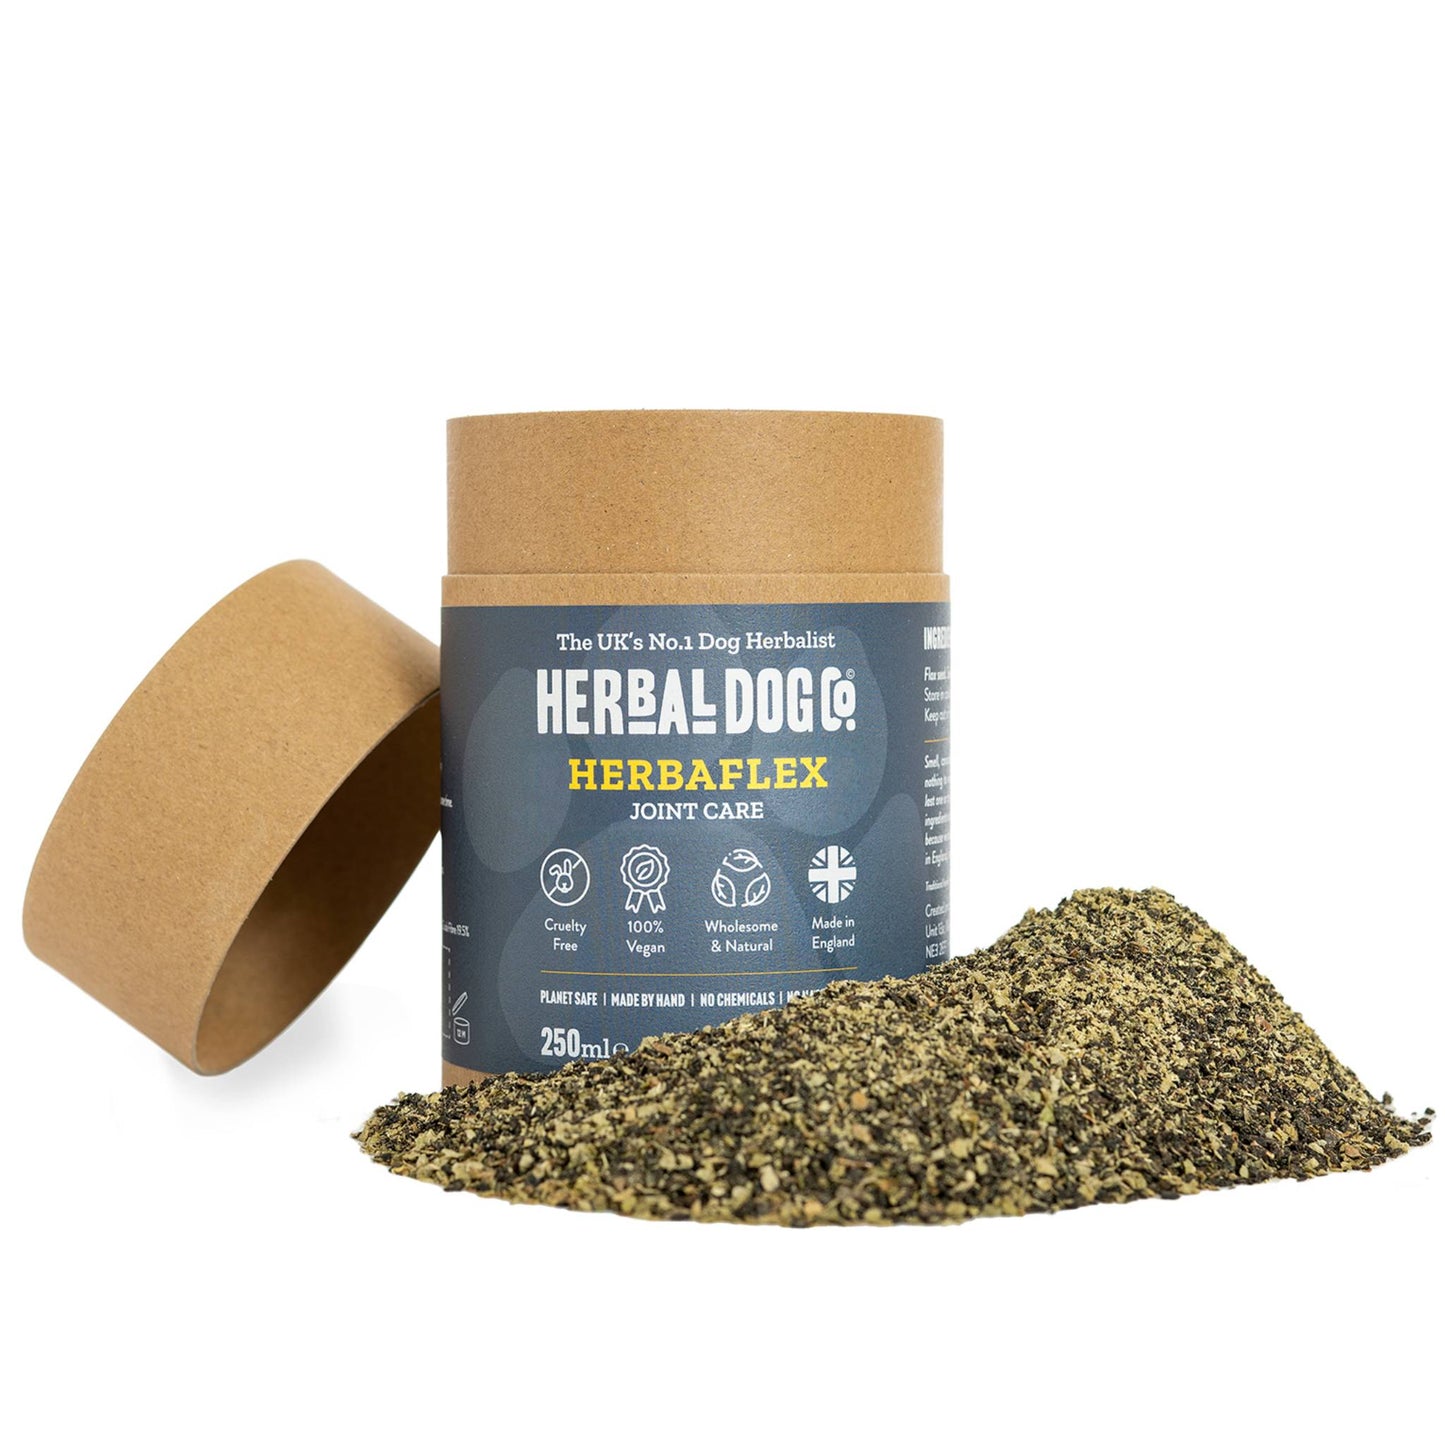 Herbal Dog Co Herbaflex Joint Support Supplement